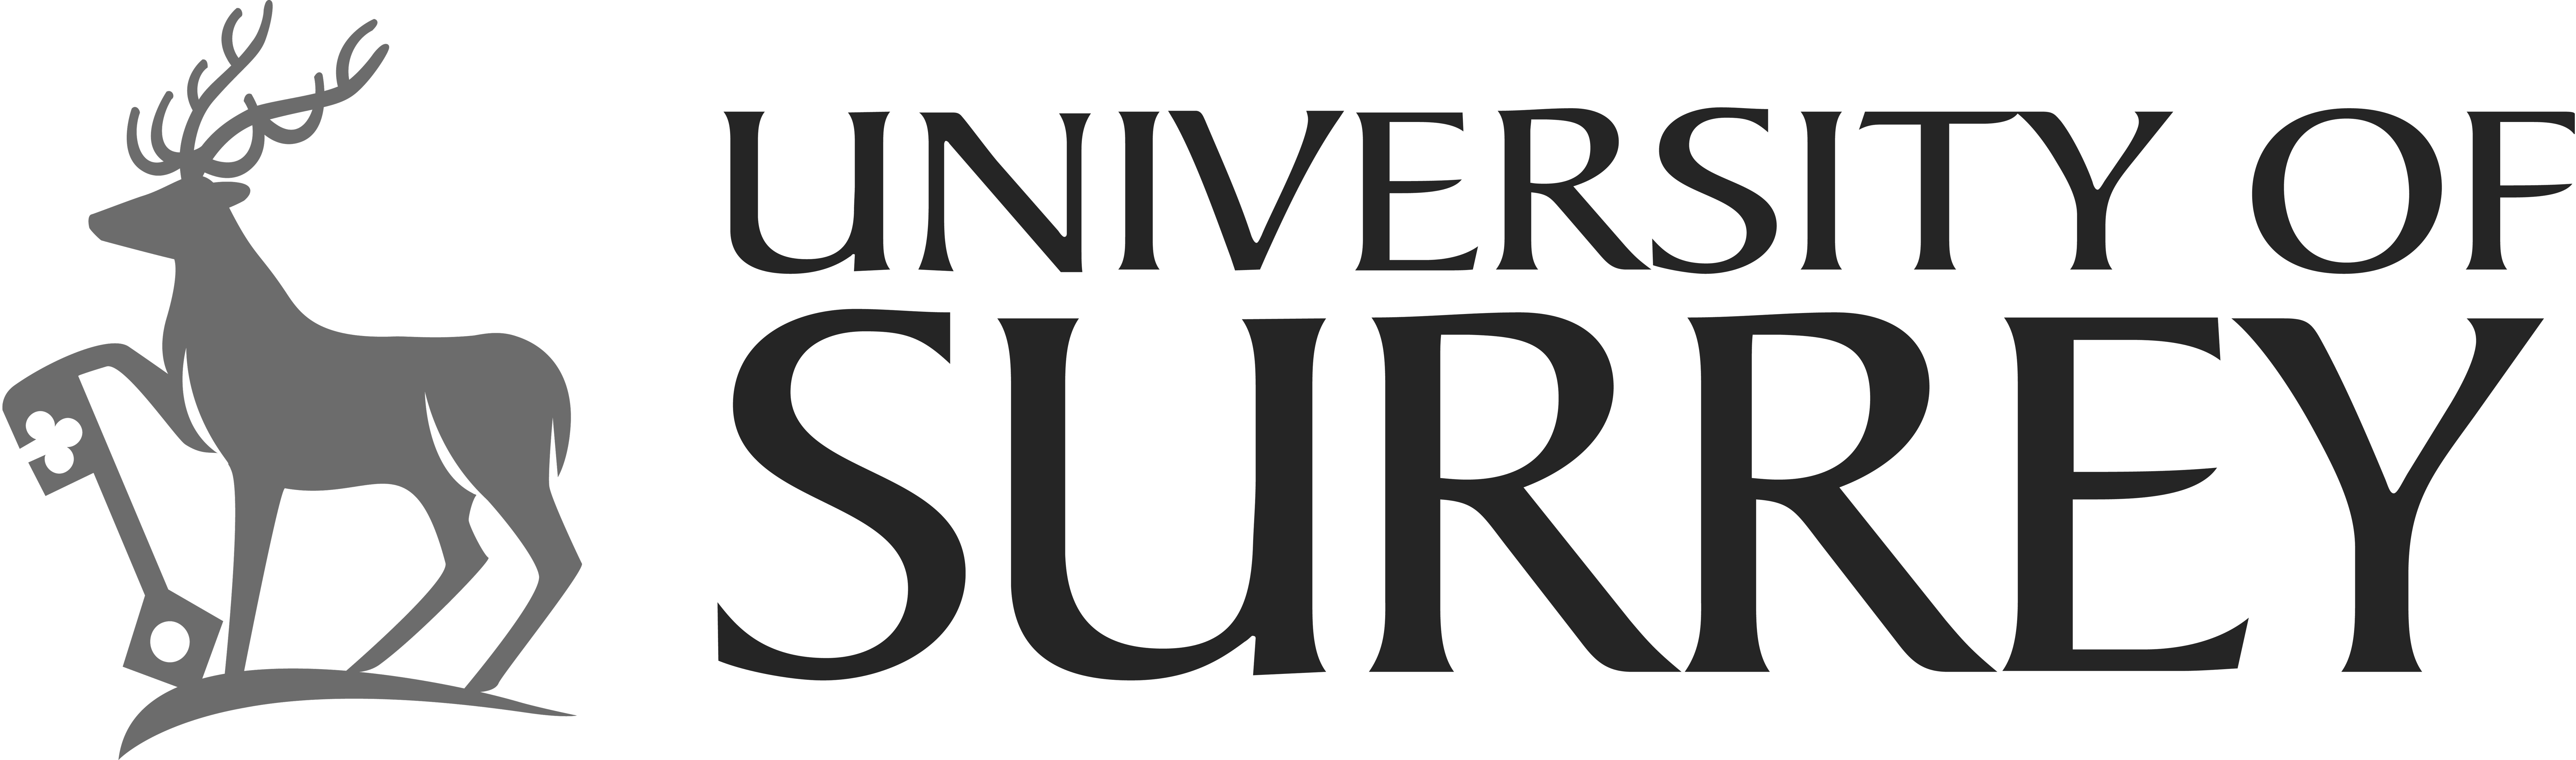 University-of-surrey